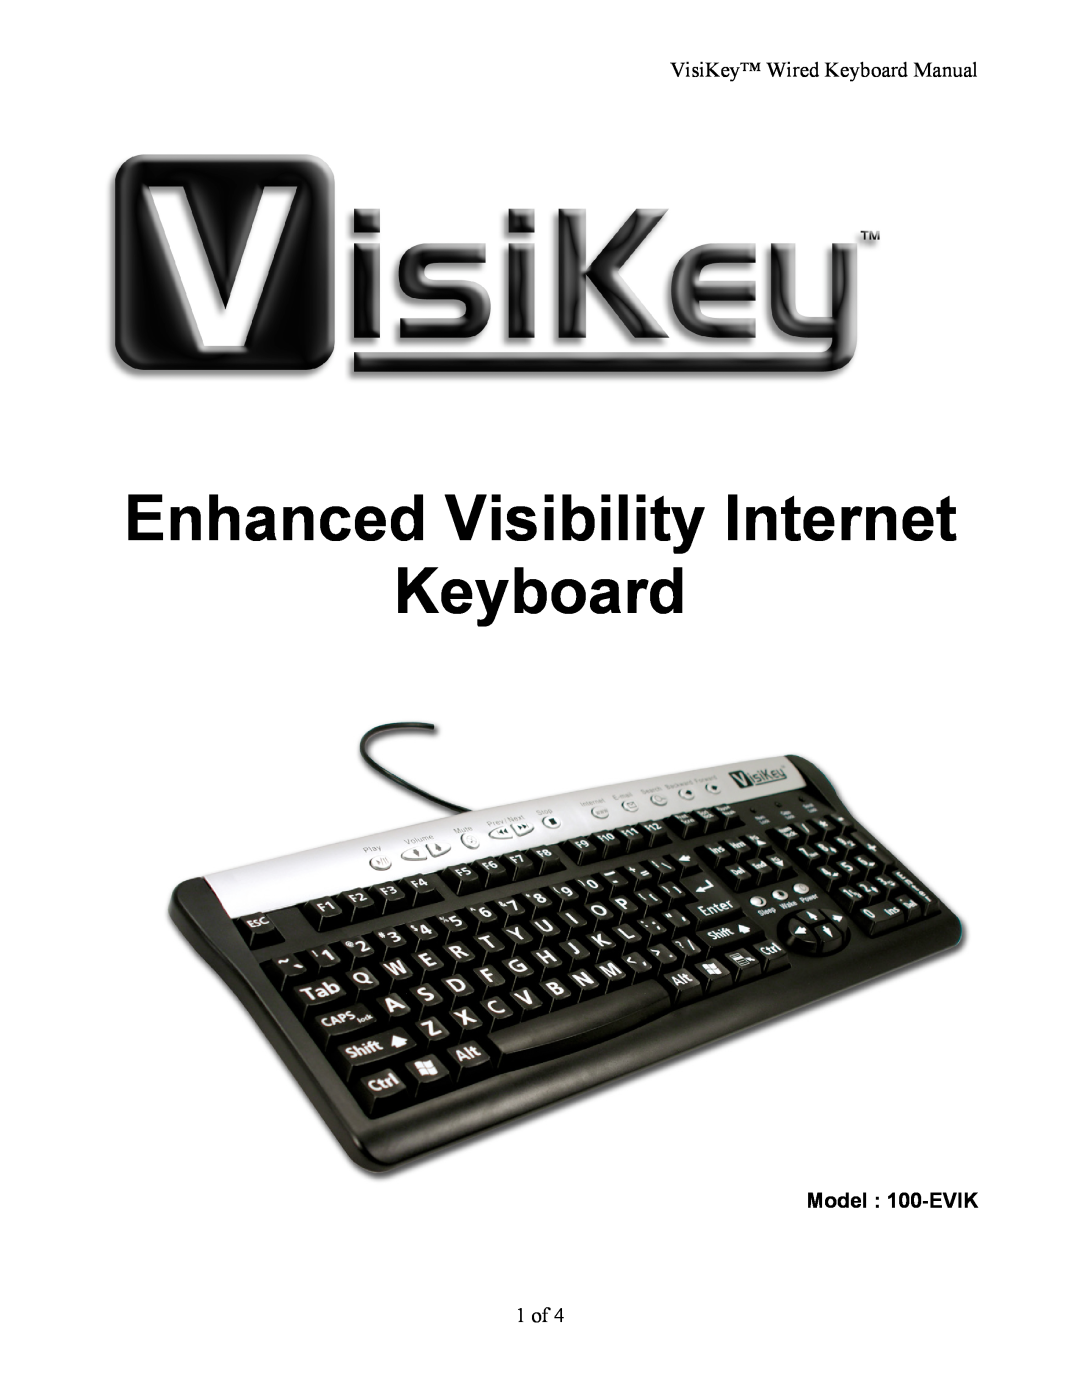 Sharp manual VisiKey Wired Keyboard Manual, 1 of, Enhanced Visibility Internet Keyboard, Model 100-EVIK 